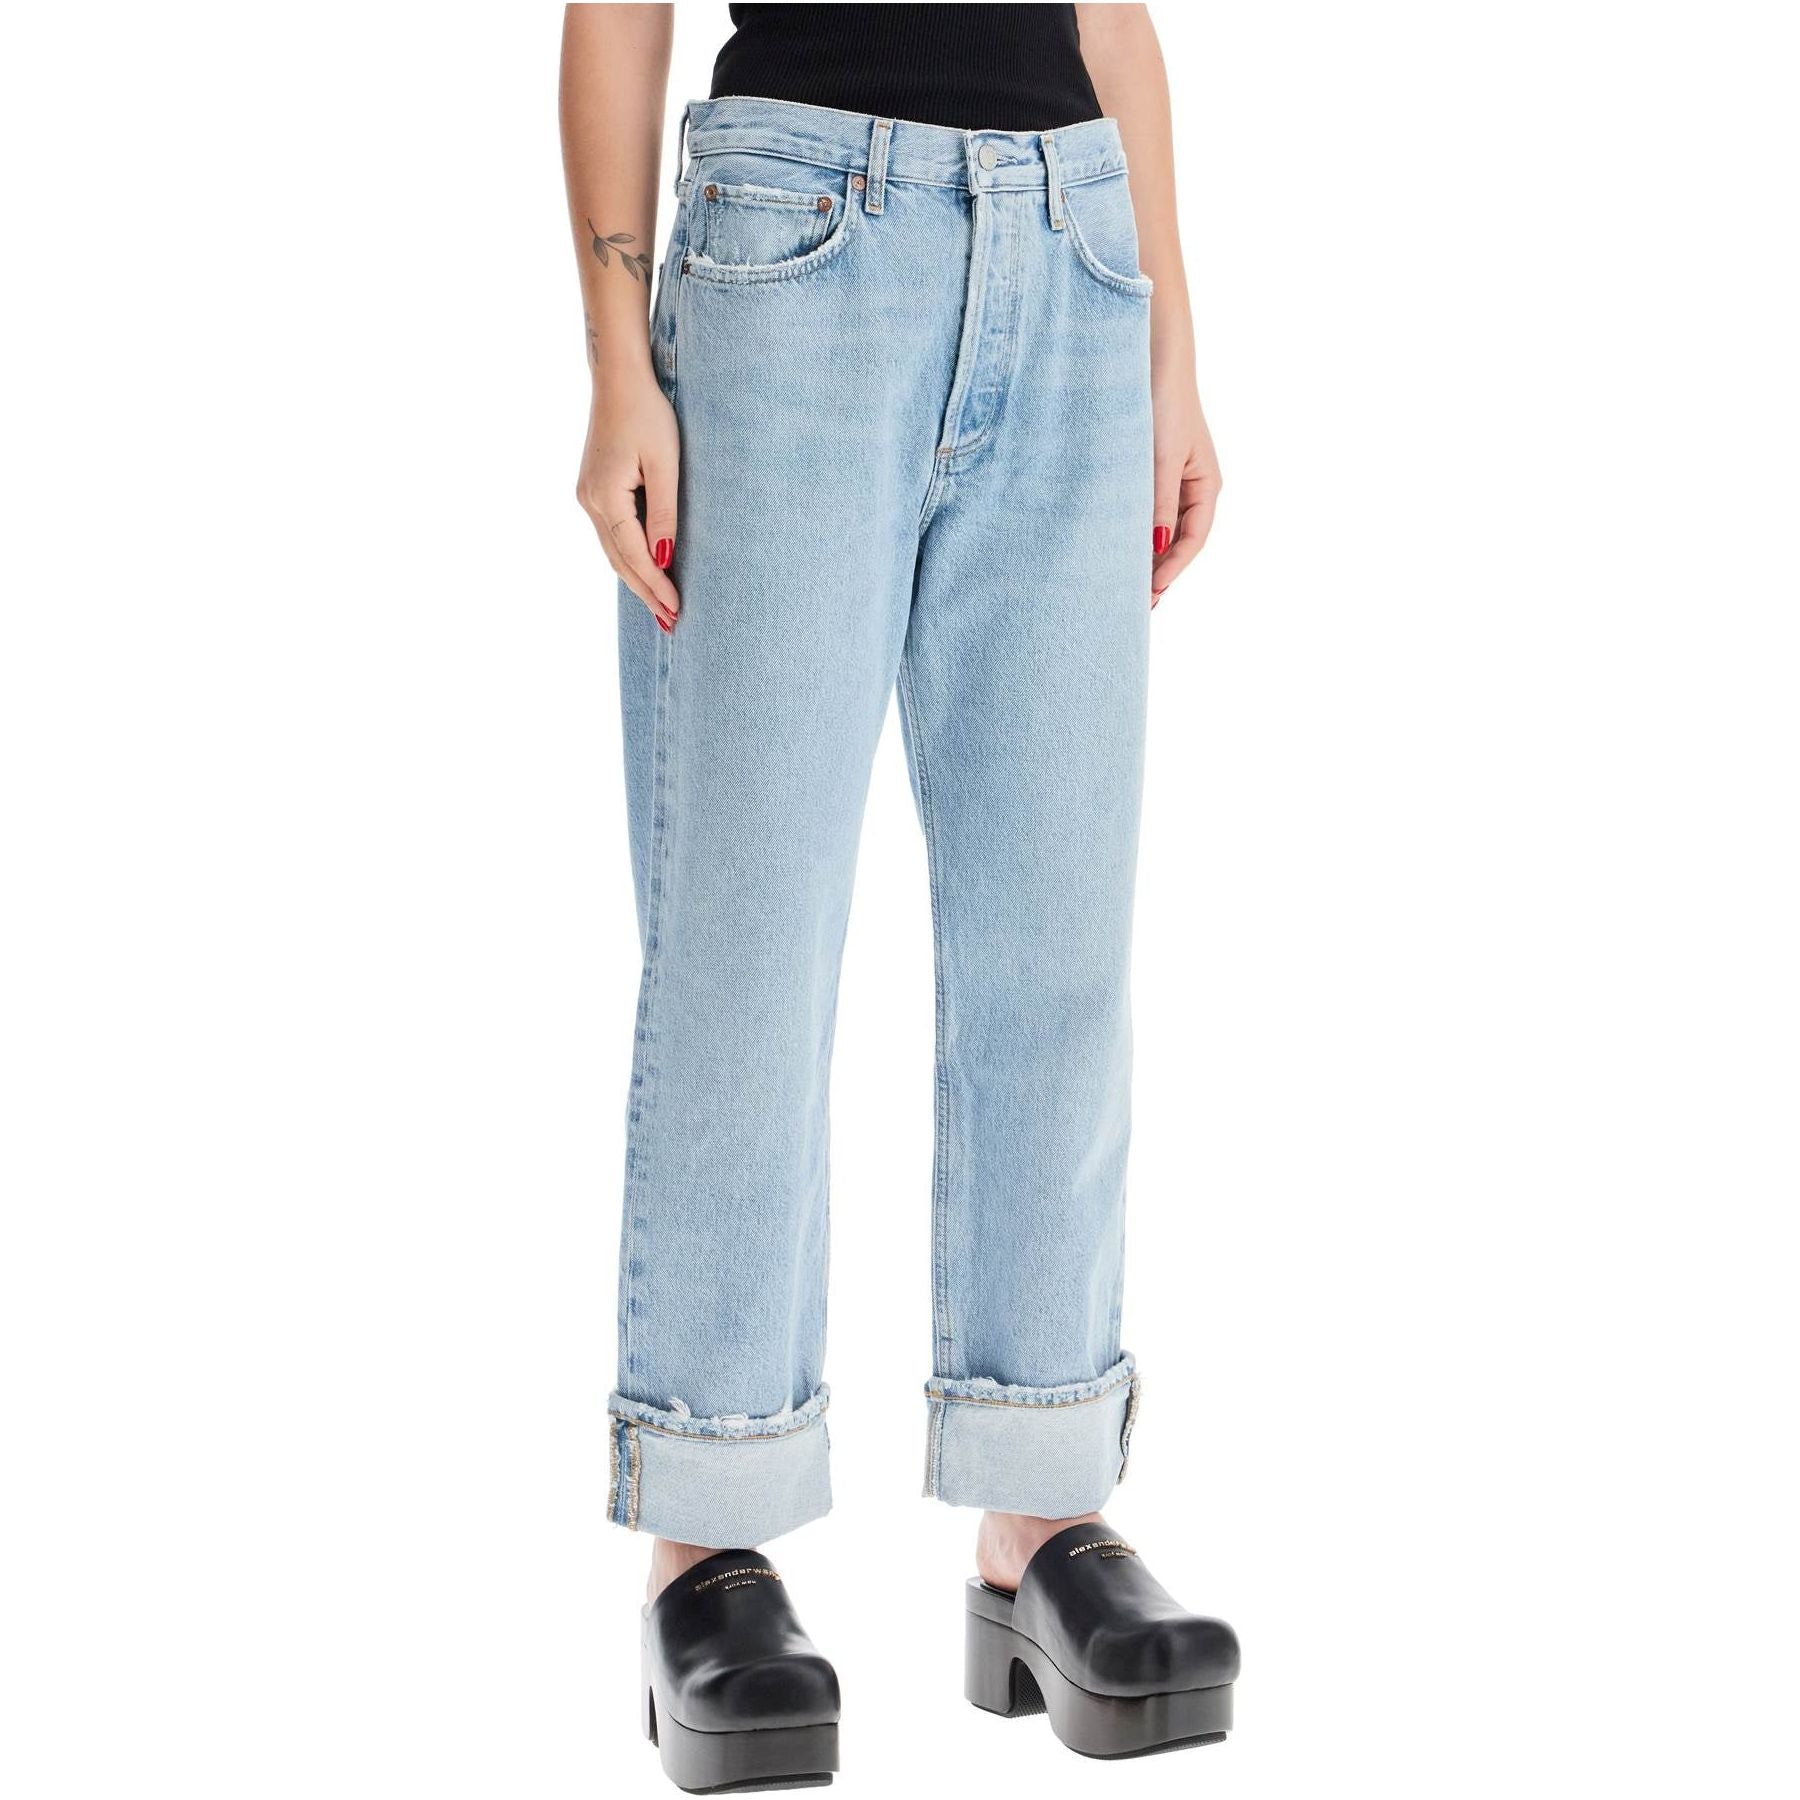 Regenerated Cotton Fran Low-Slung Jeans